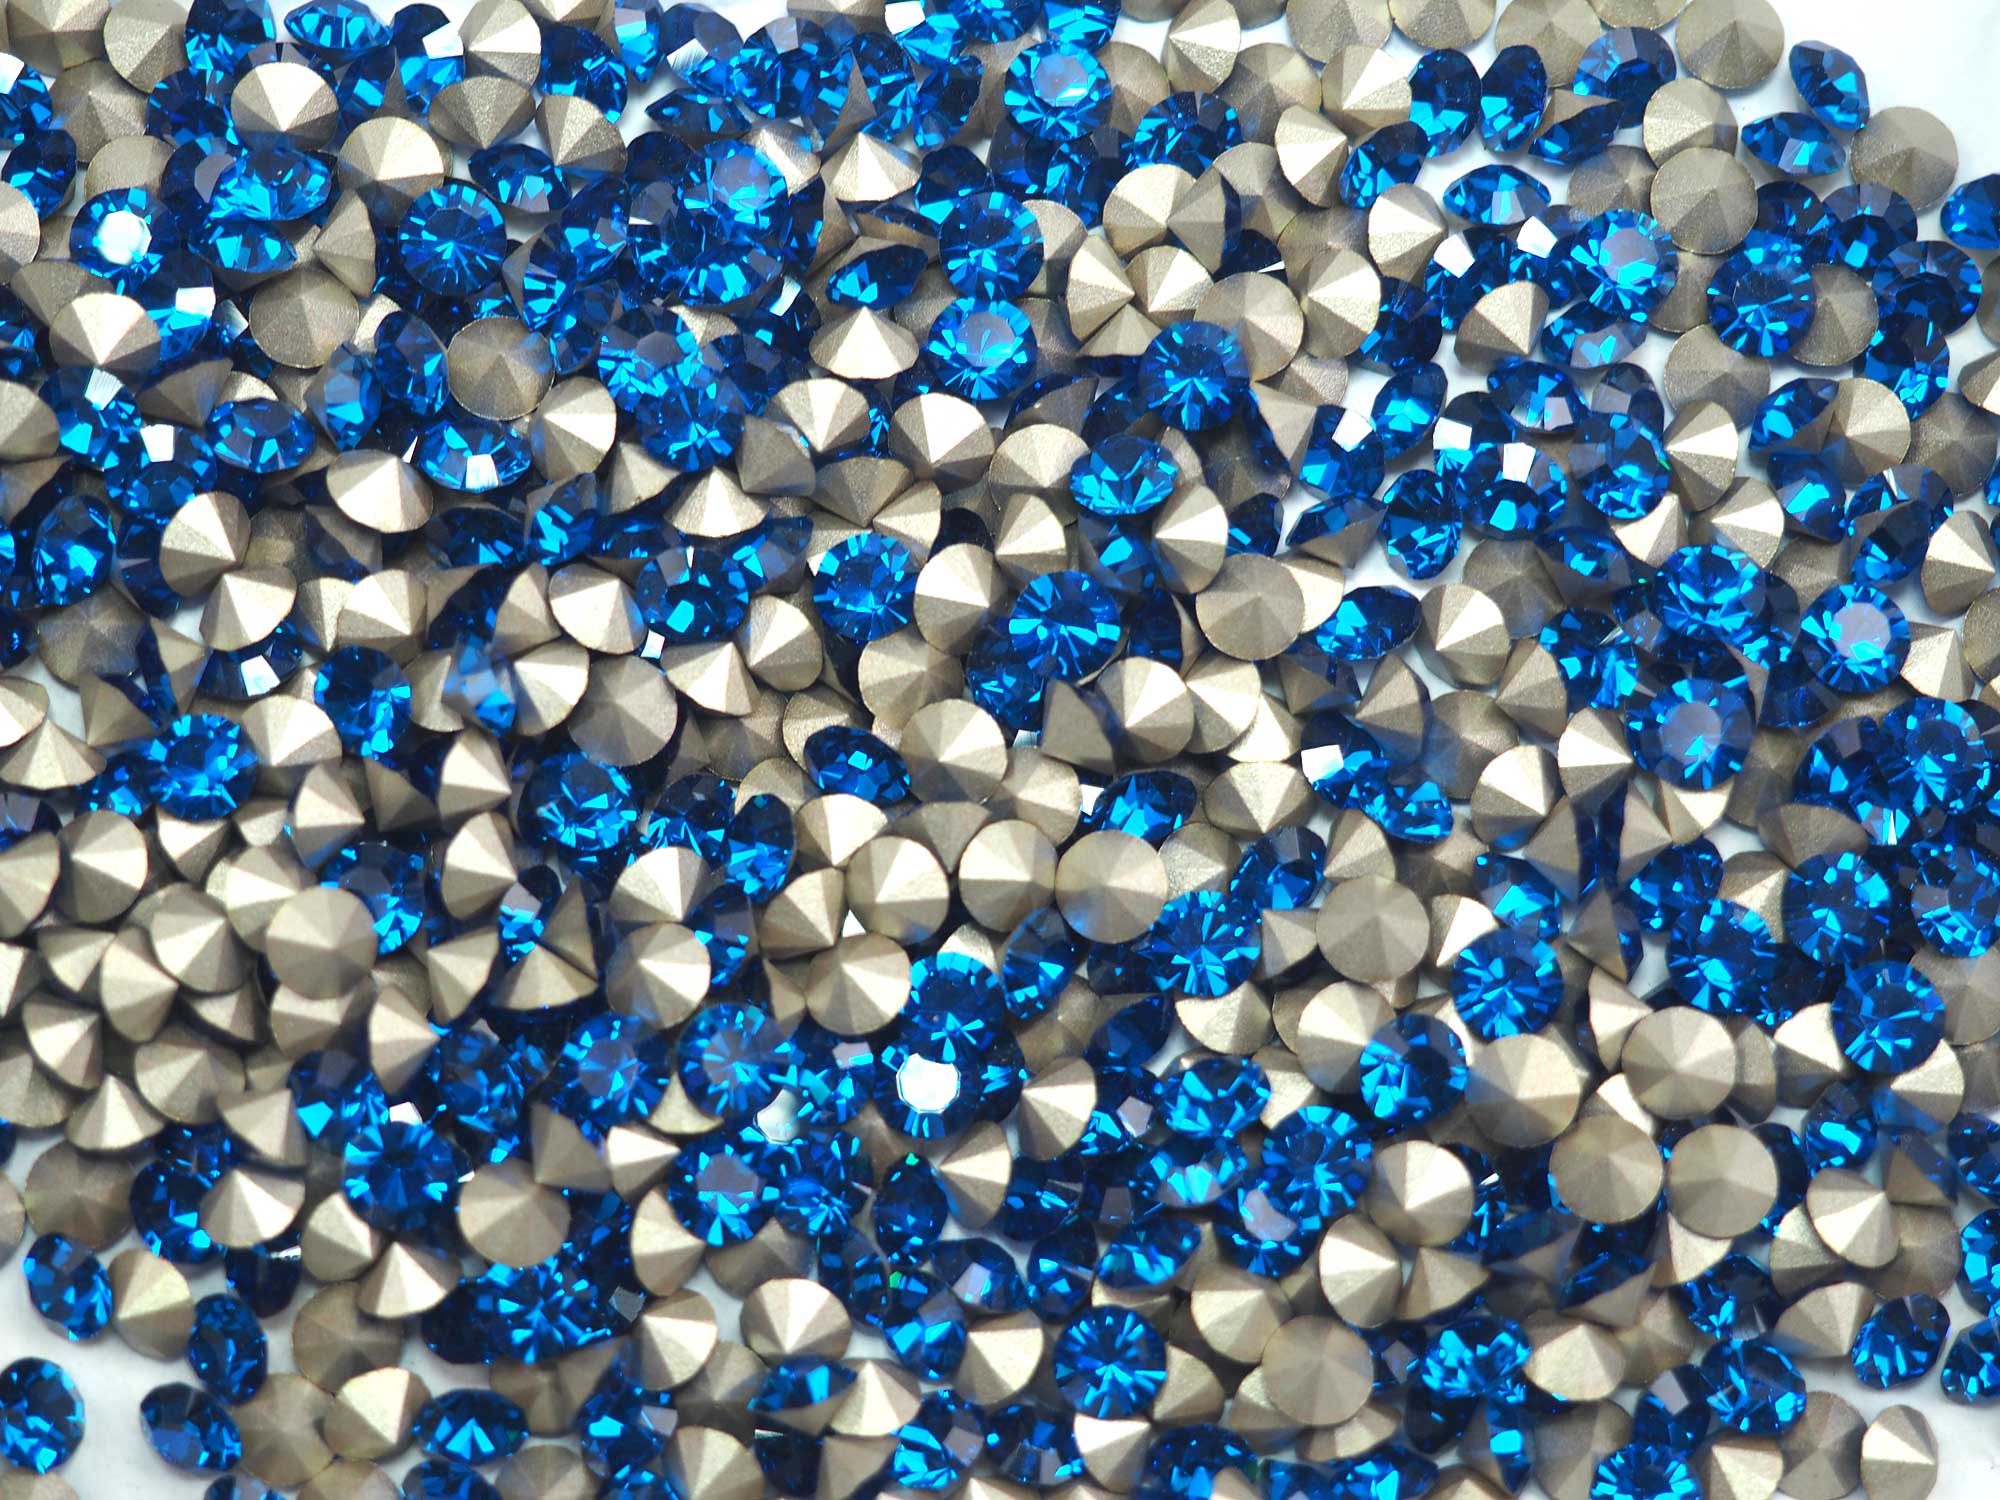 Capri Blue, Preciosa Genuine Czech MAXIMA Pointed Back Chatons in size ss28 (6mm, 0.24inch), 36 pieces, Silver Foiled, P629